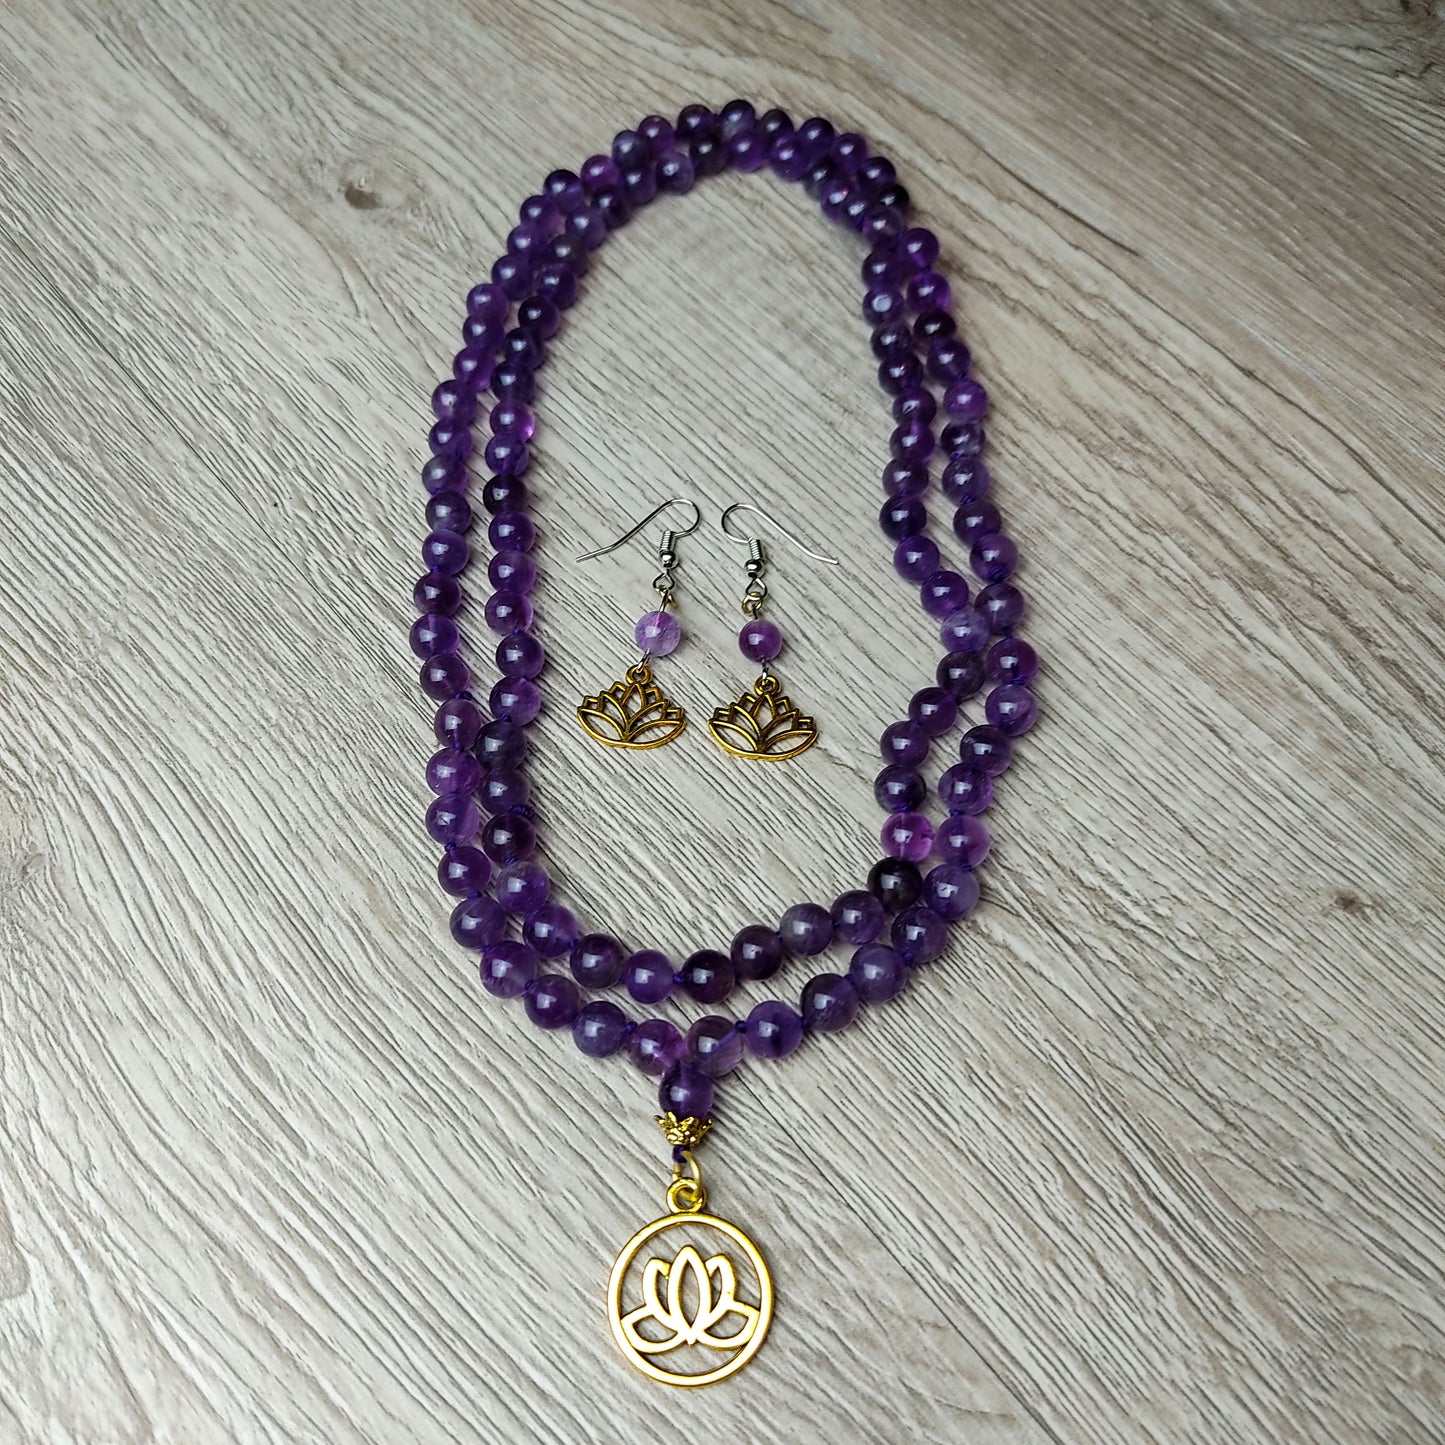 Amethsyt Gemstone 108 Beads Necklace Lotus Charm with Matching Earring Set